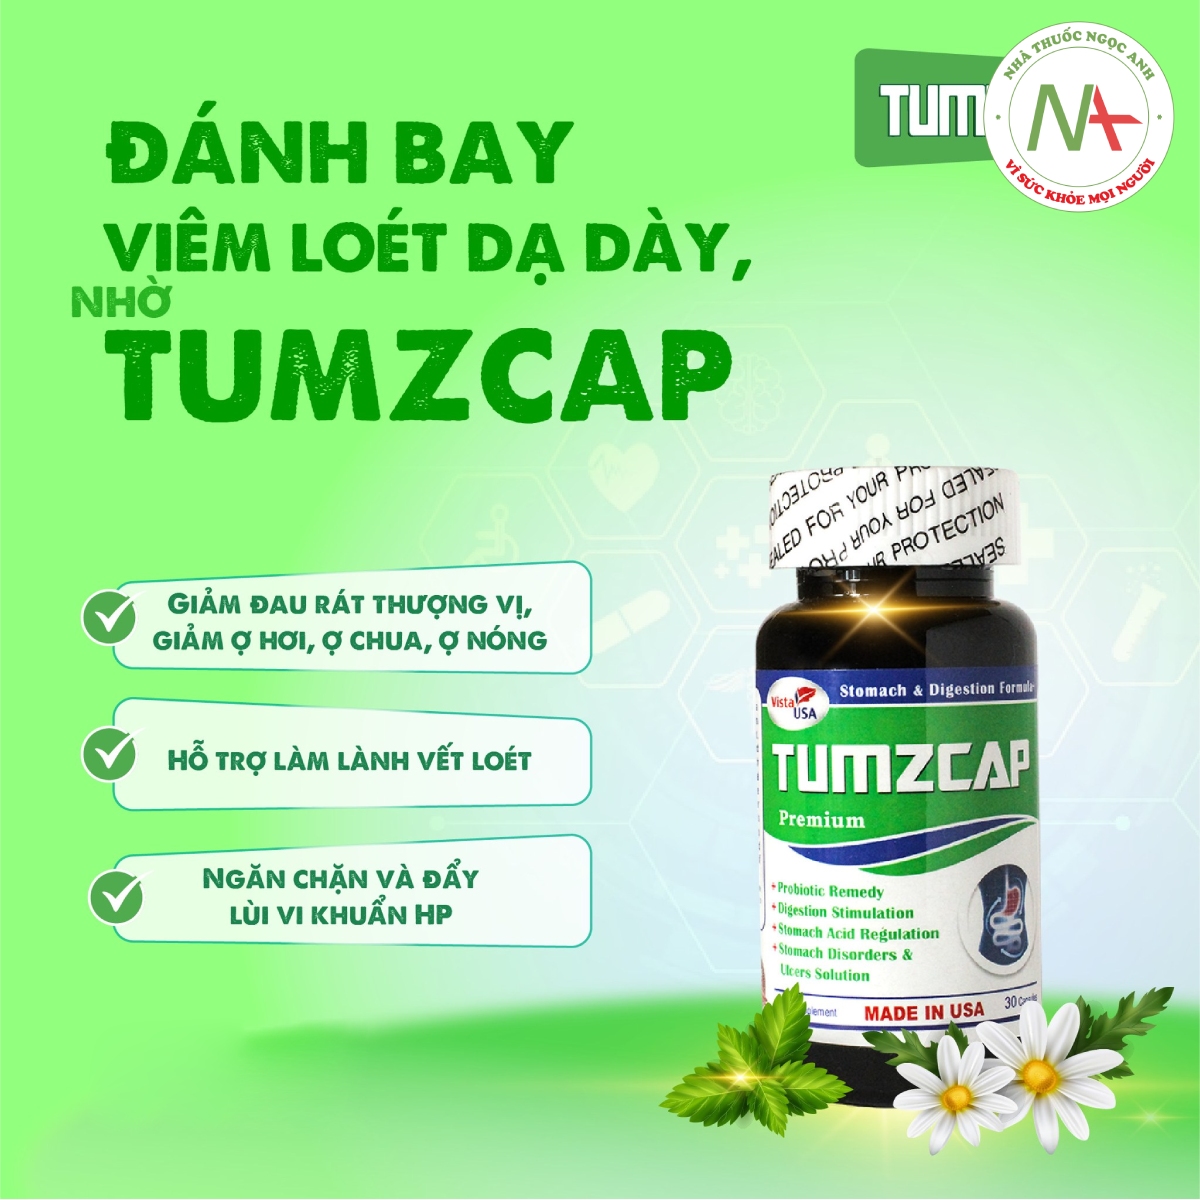 Hiệu quả của Tumzcap